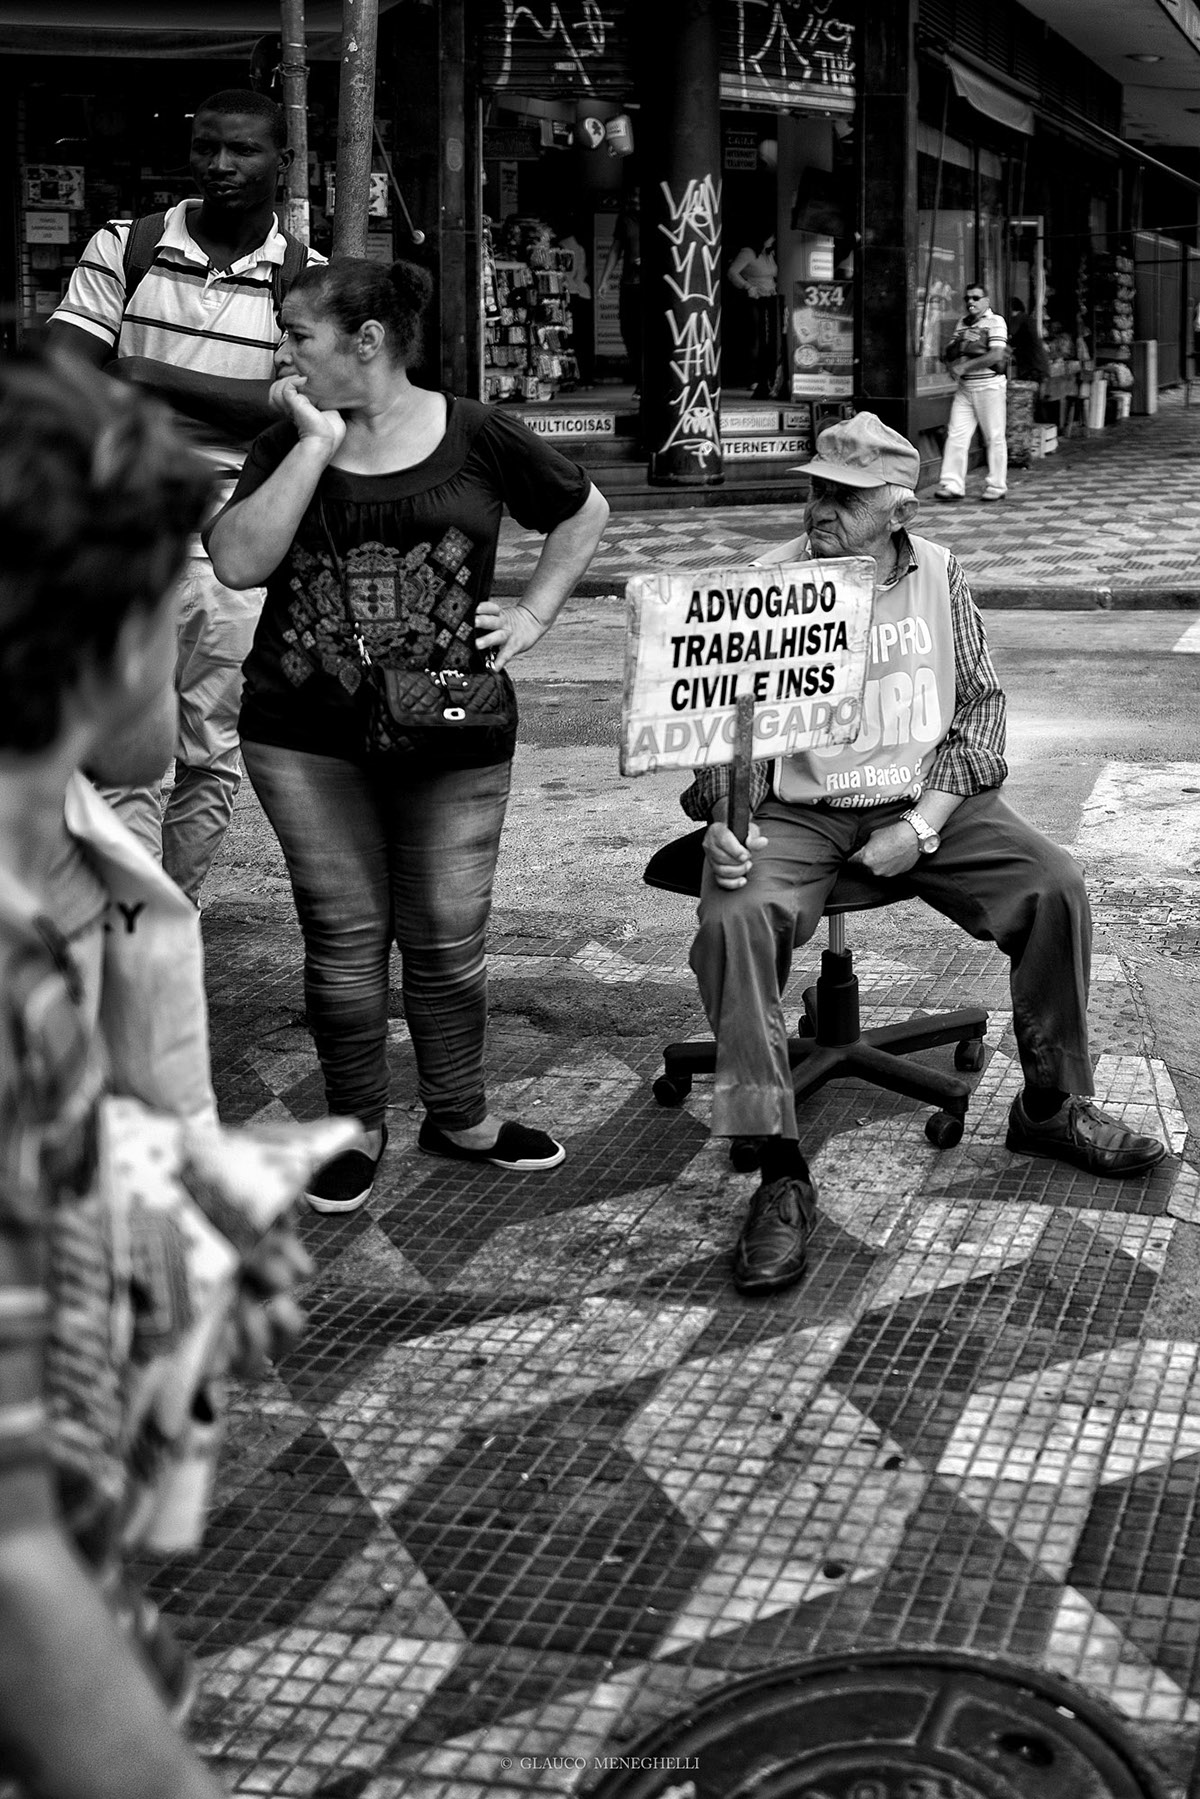 glauco_photo blackandwhite Brazil streetphotography bw glaucomeneghelli photo leicacamera